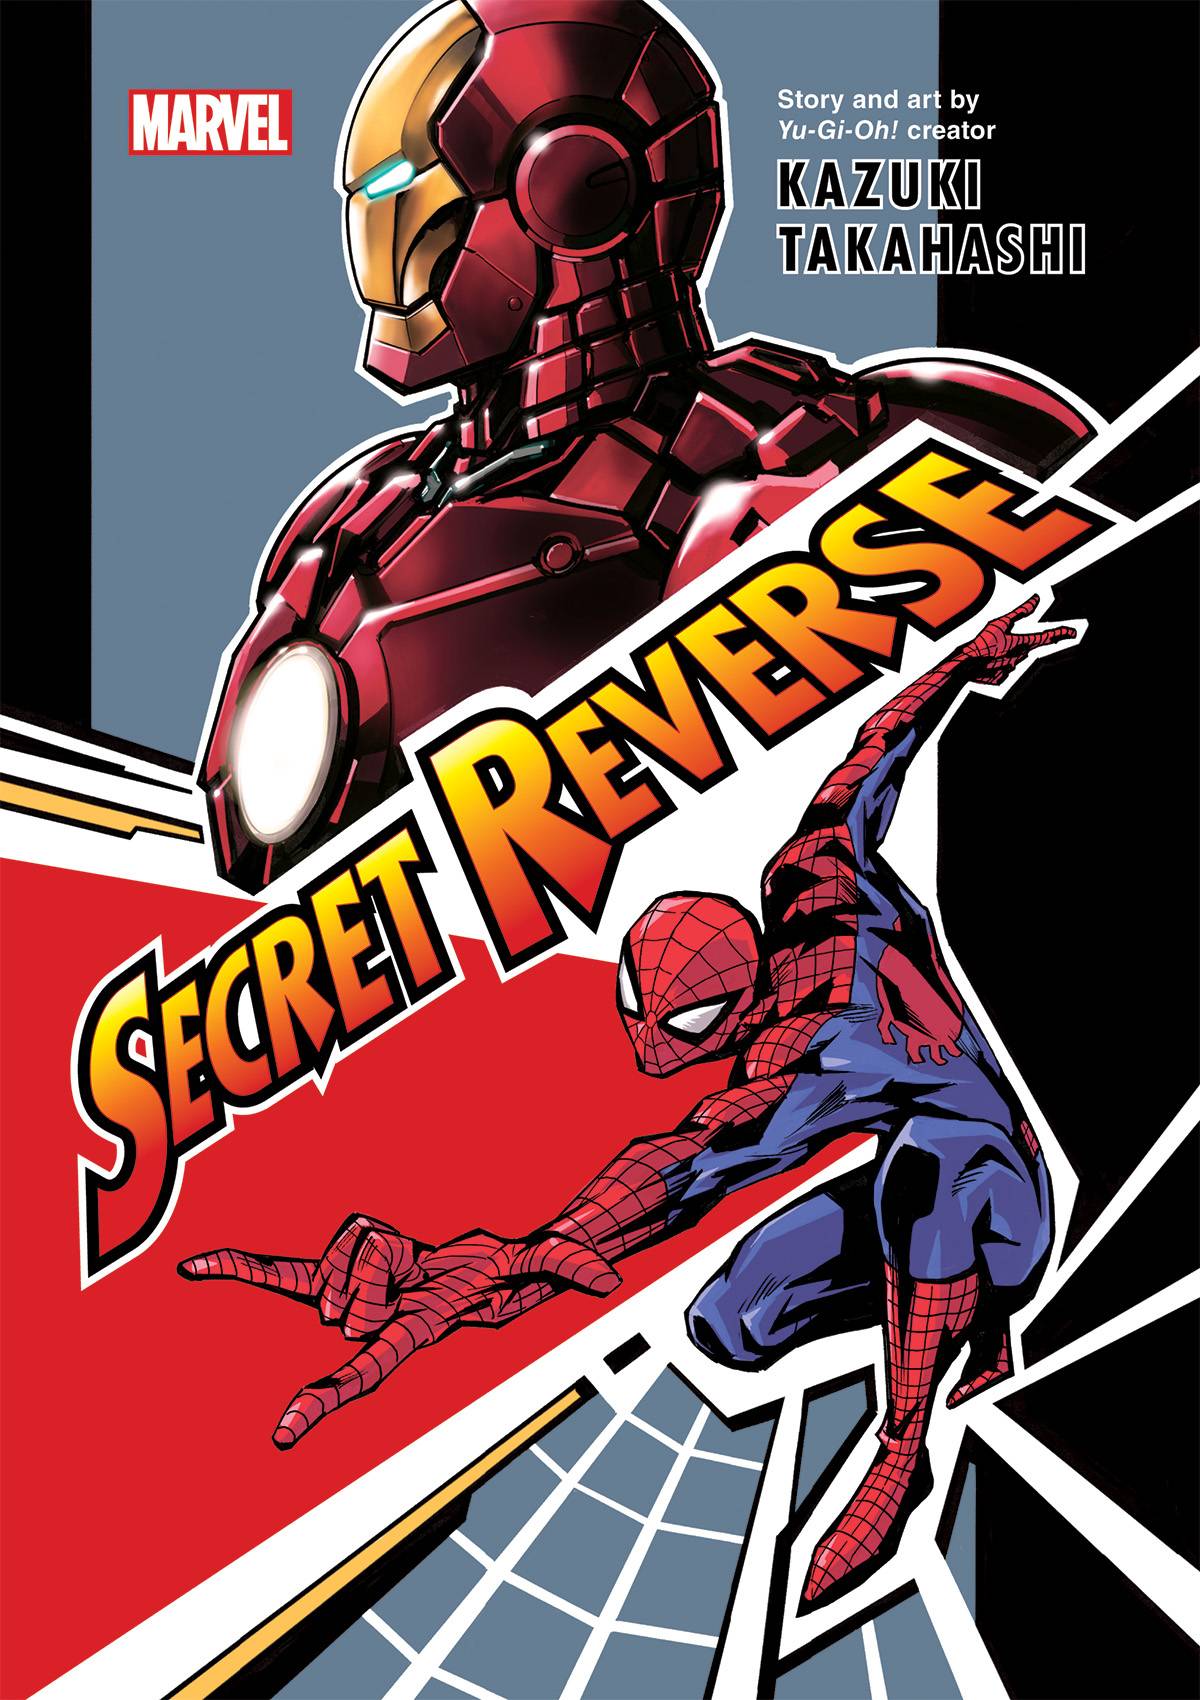 Marvels Secret Reverse TP